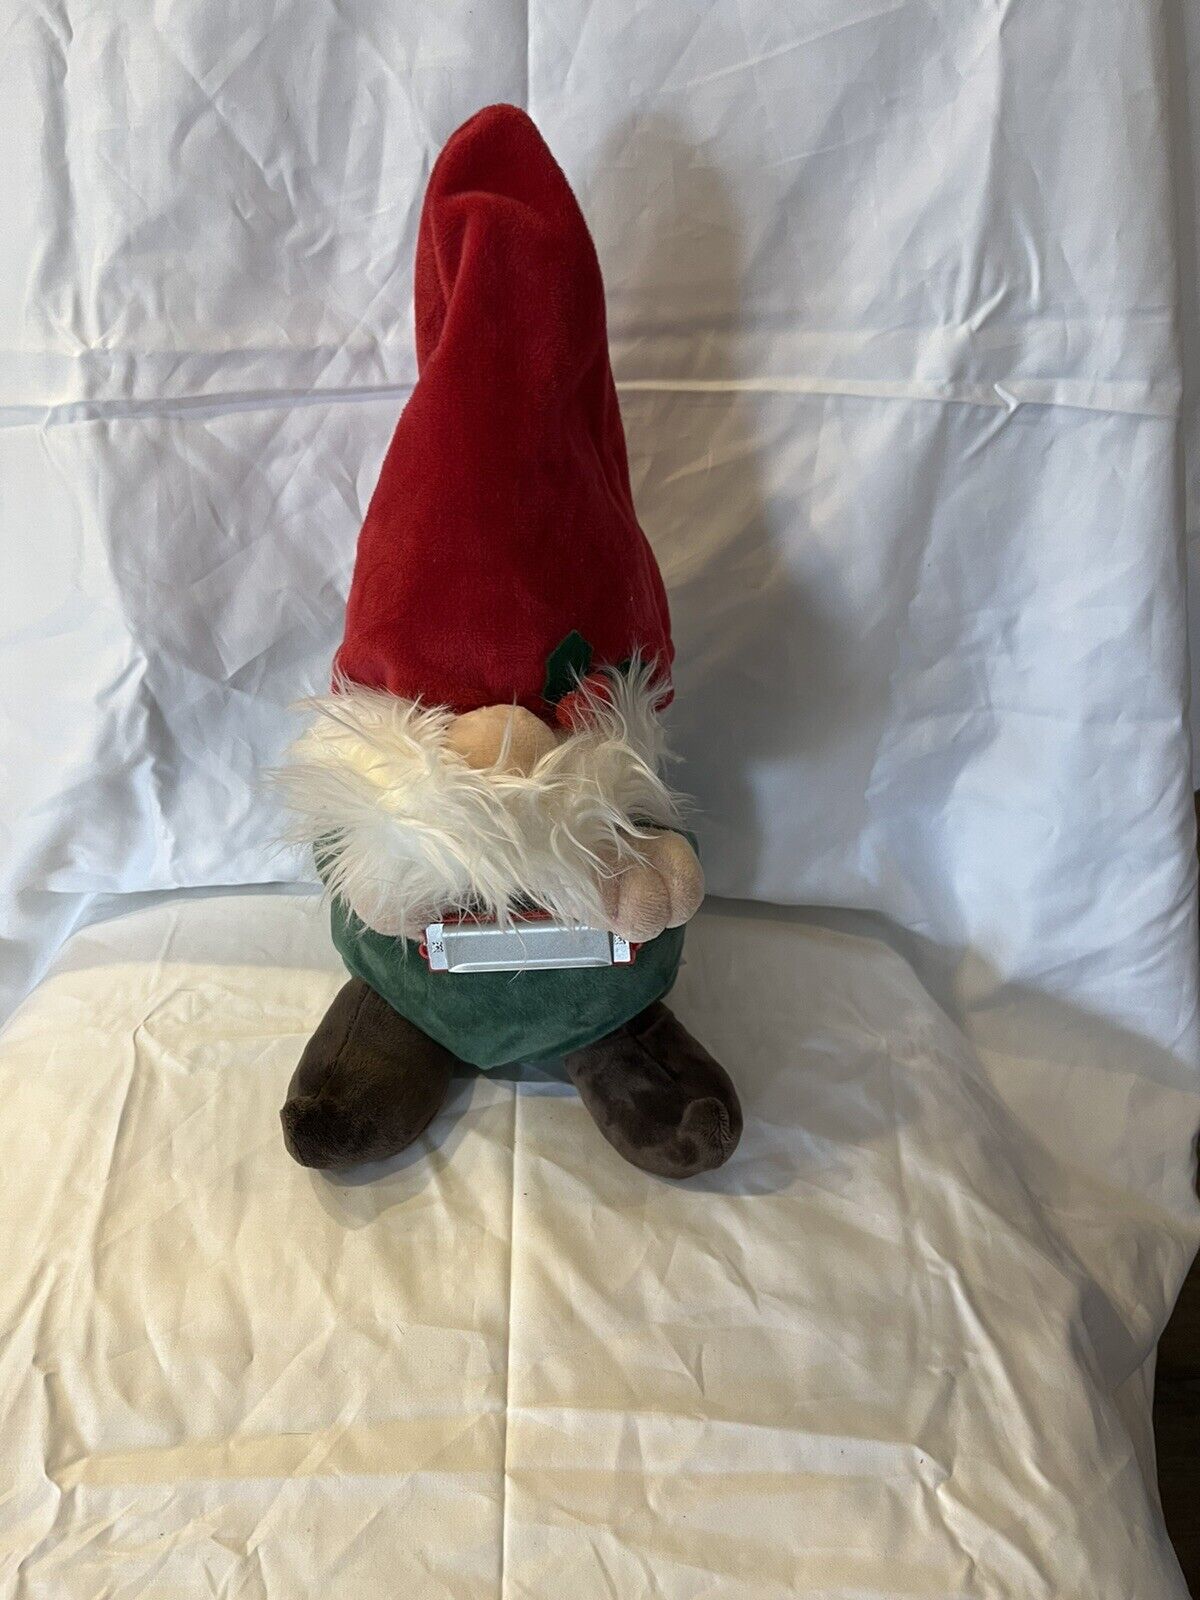 Pan Asian Santa Gnome With Harmonica animated Taps Foot Songs Santa Claus 14”